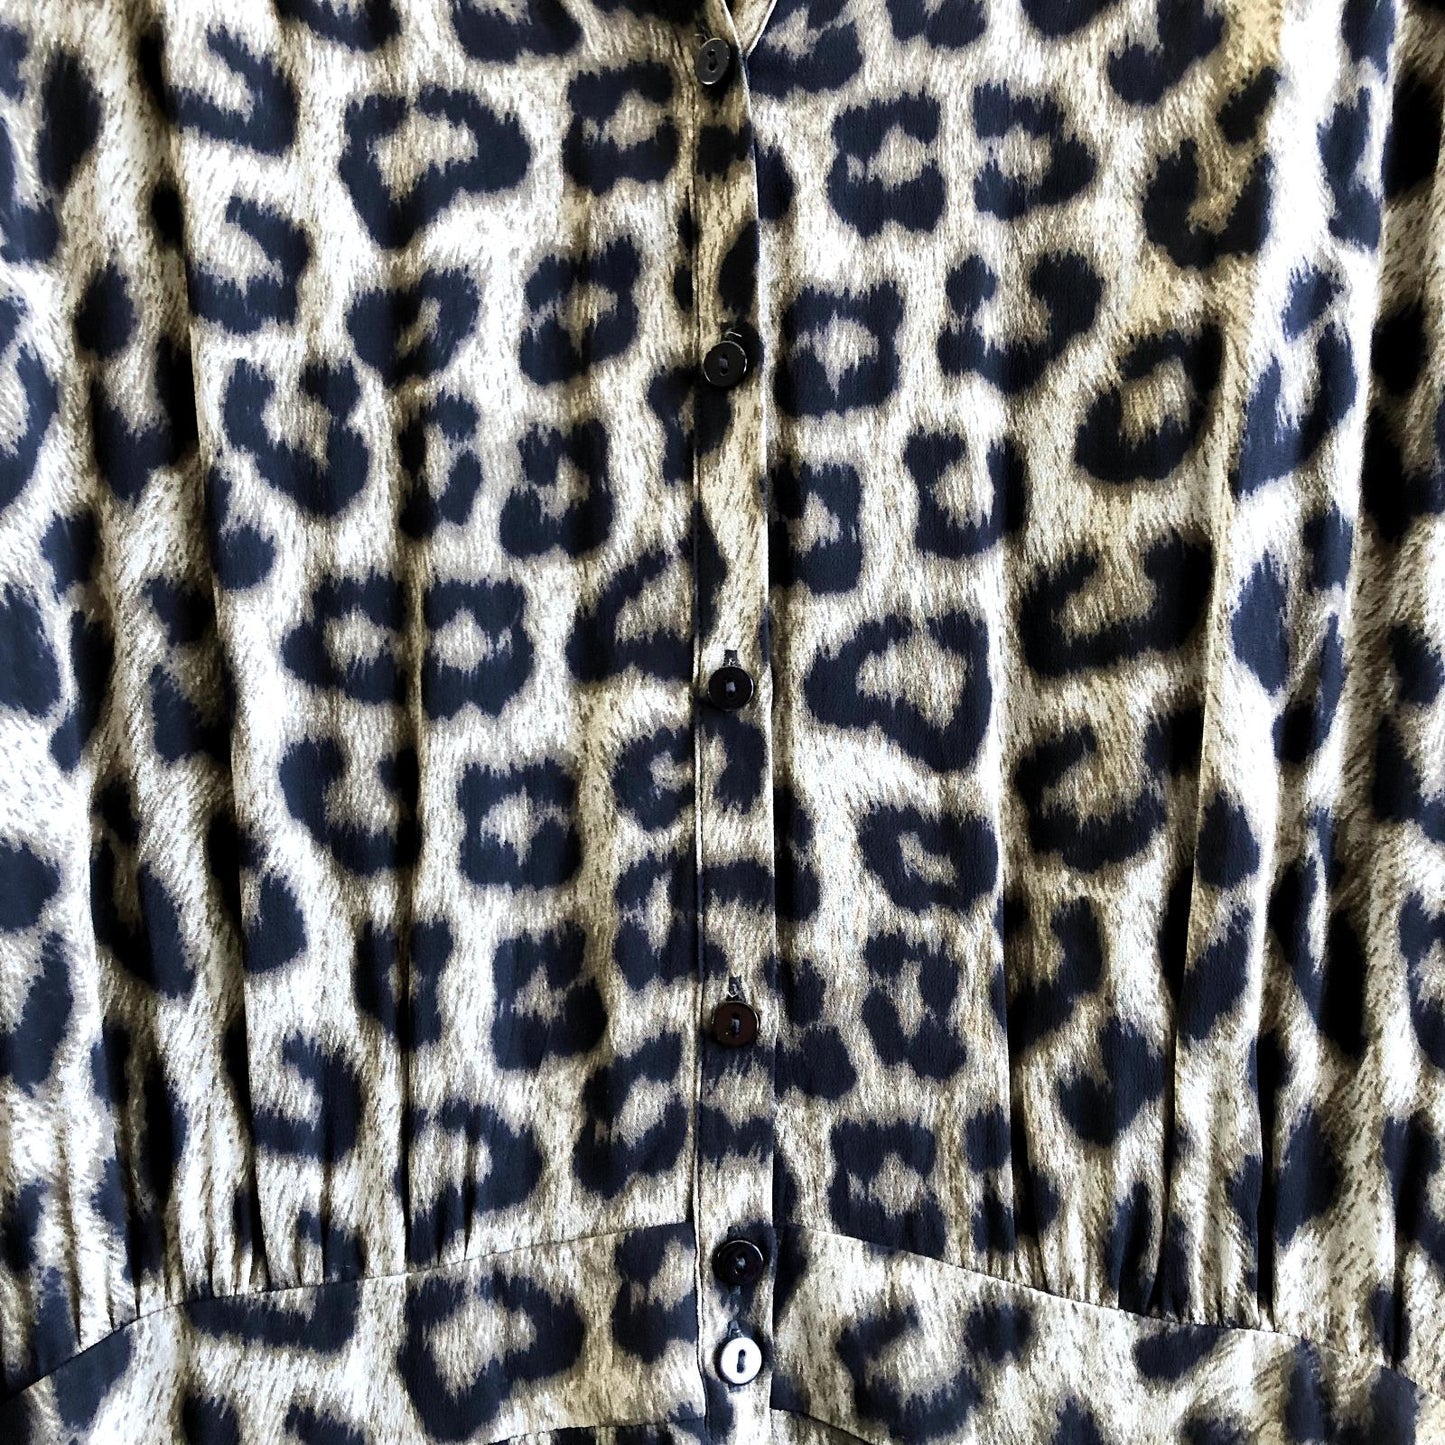 1 / S - Ba & Sh Flake Leopard Print Button Front Tiered Maxi Dress 0802SM